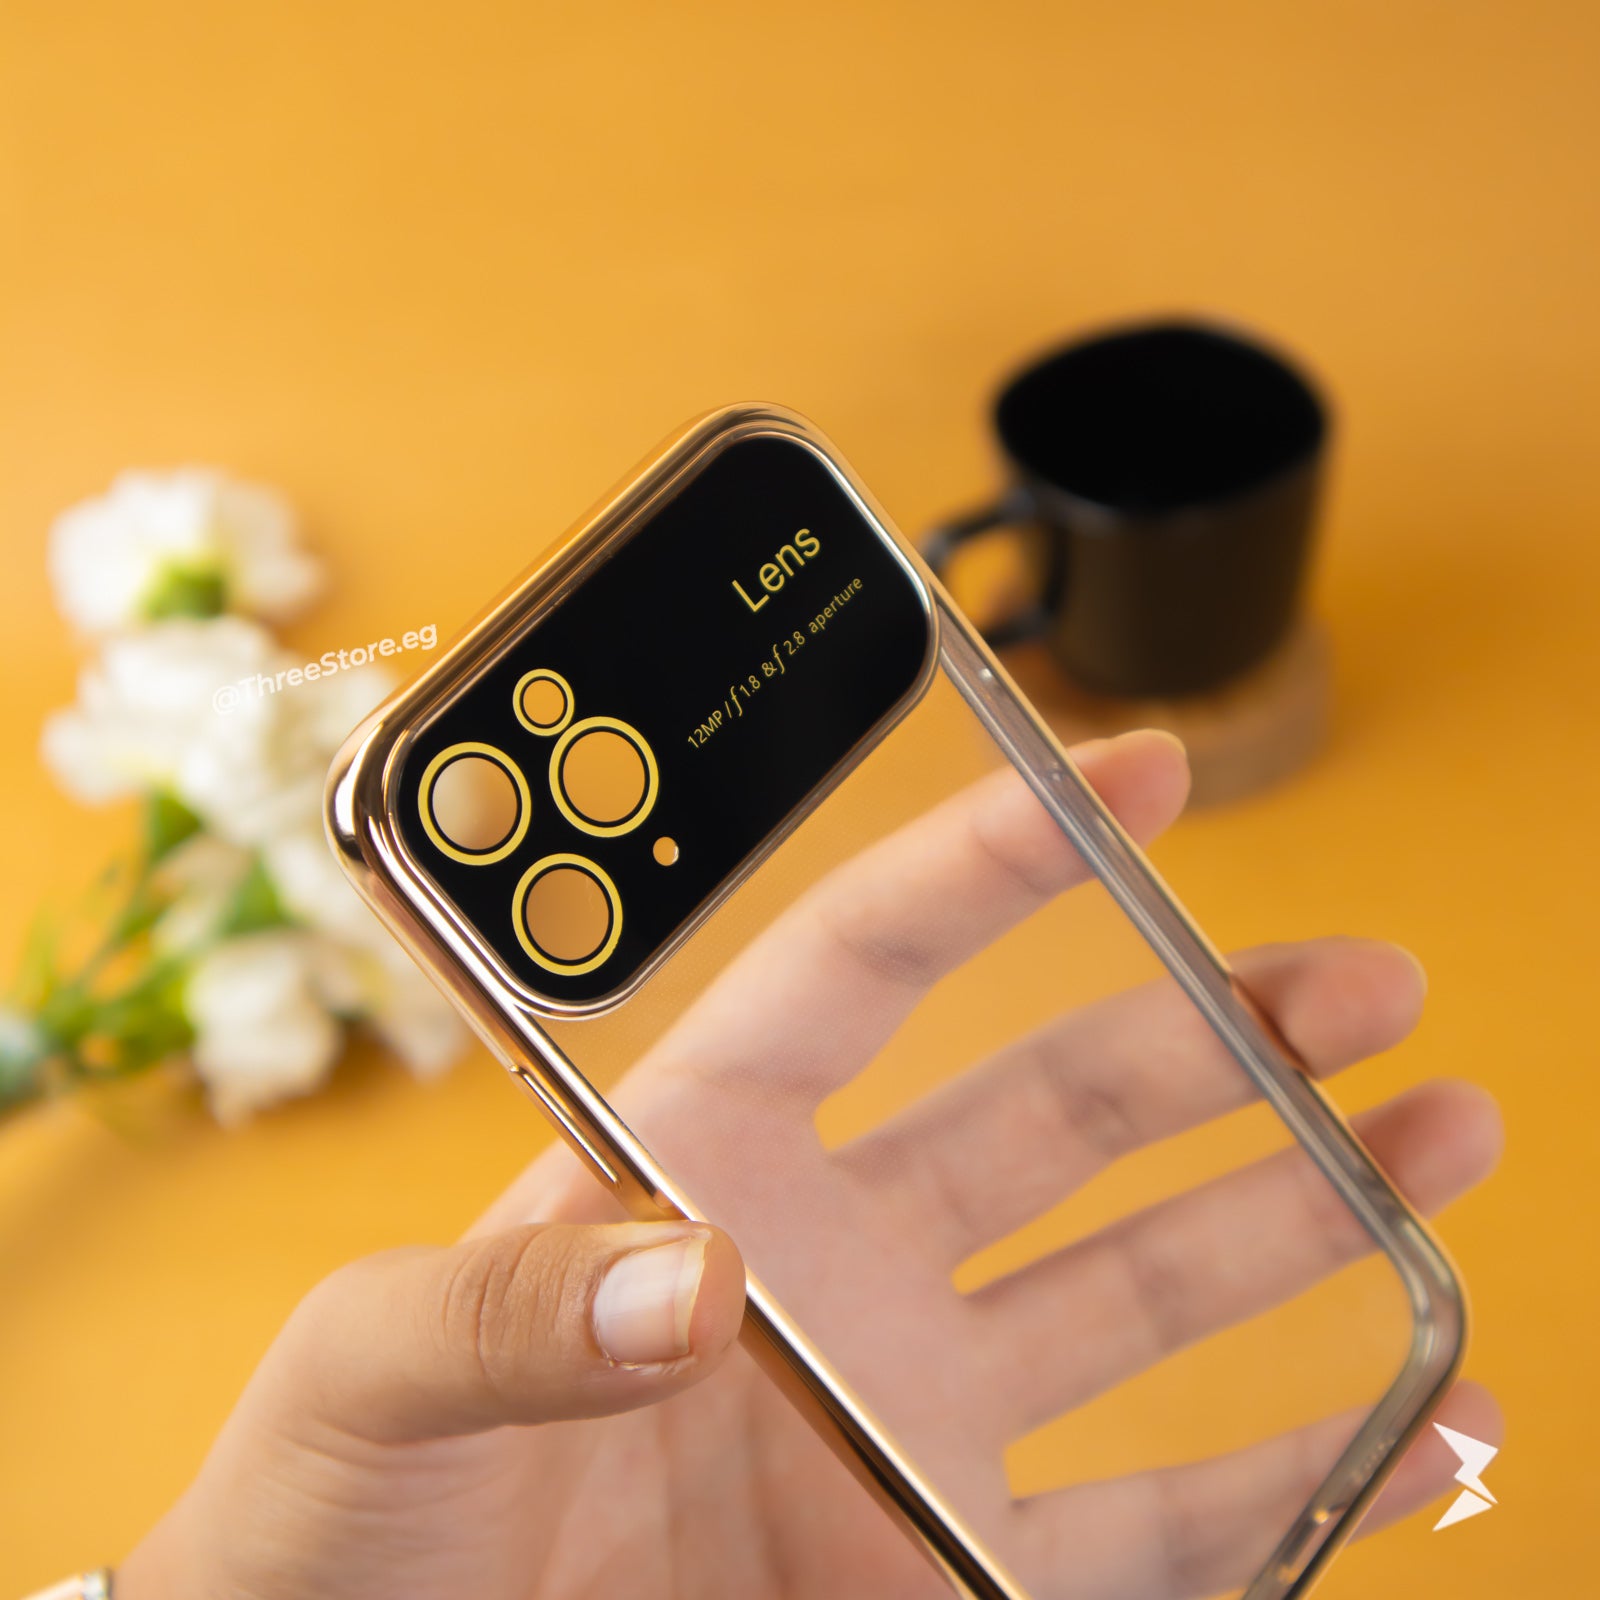 جراب iPhone 11 Pro ب Camera Protection لتحمي الكاميرا مع مرونه عاليه للجراب